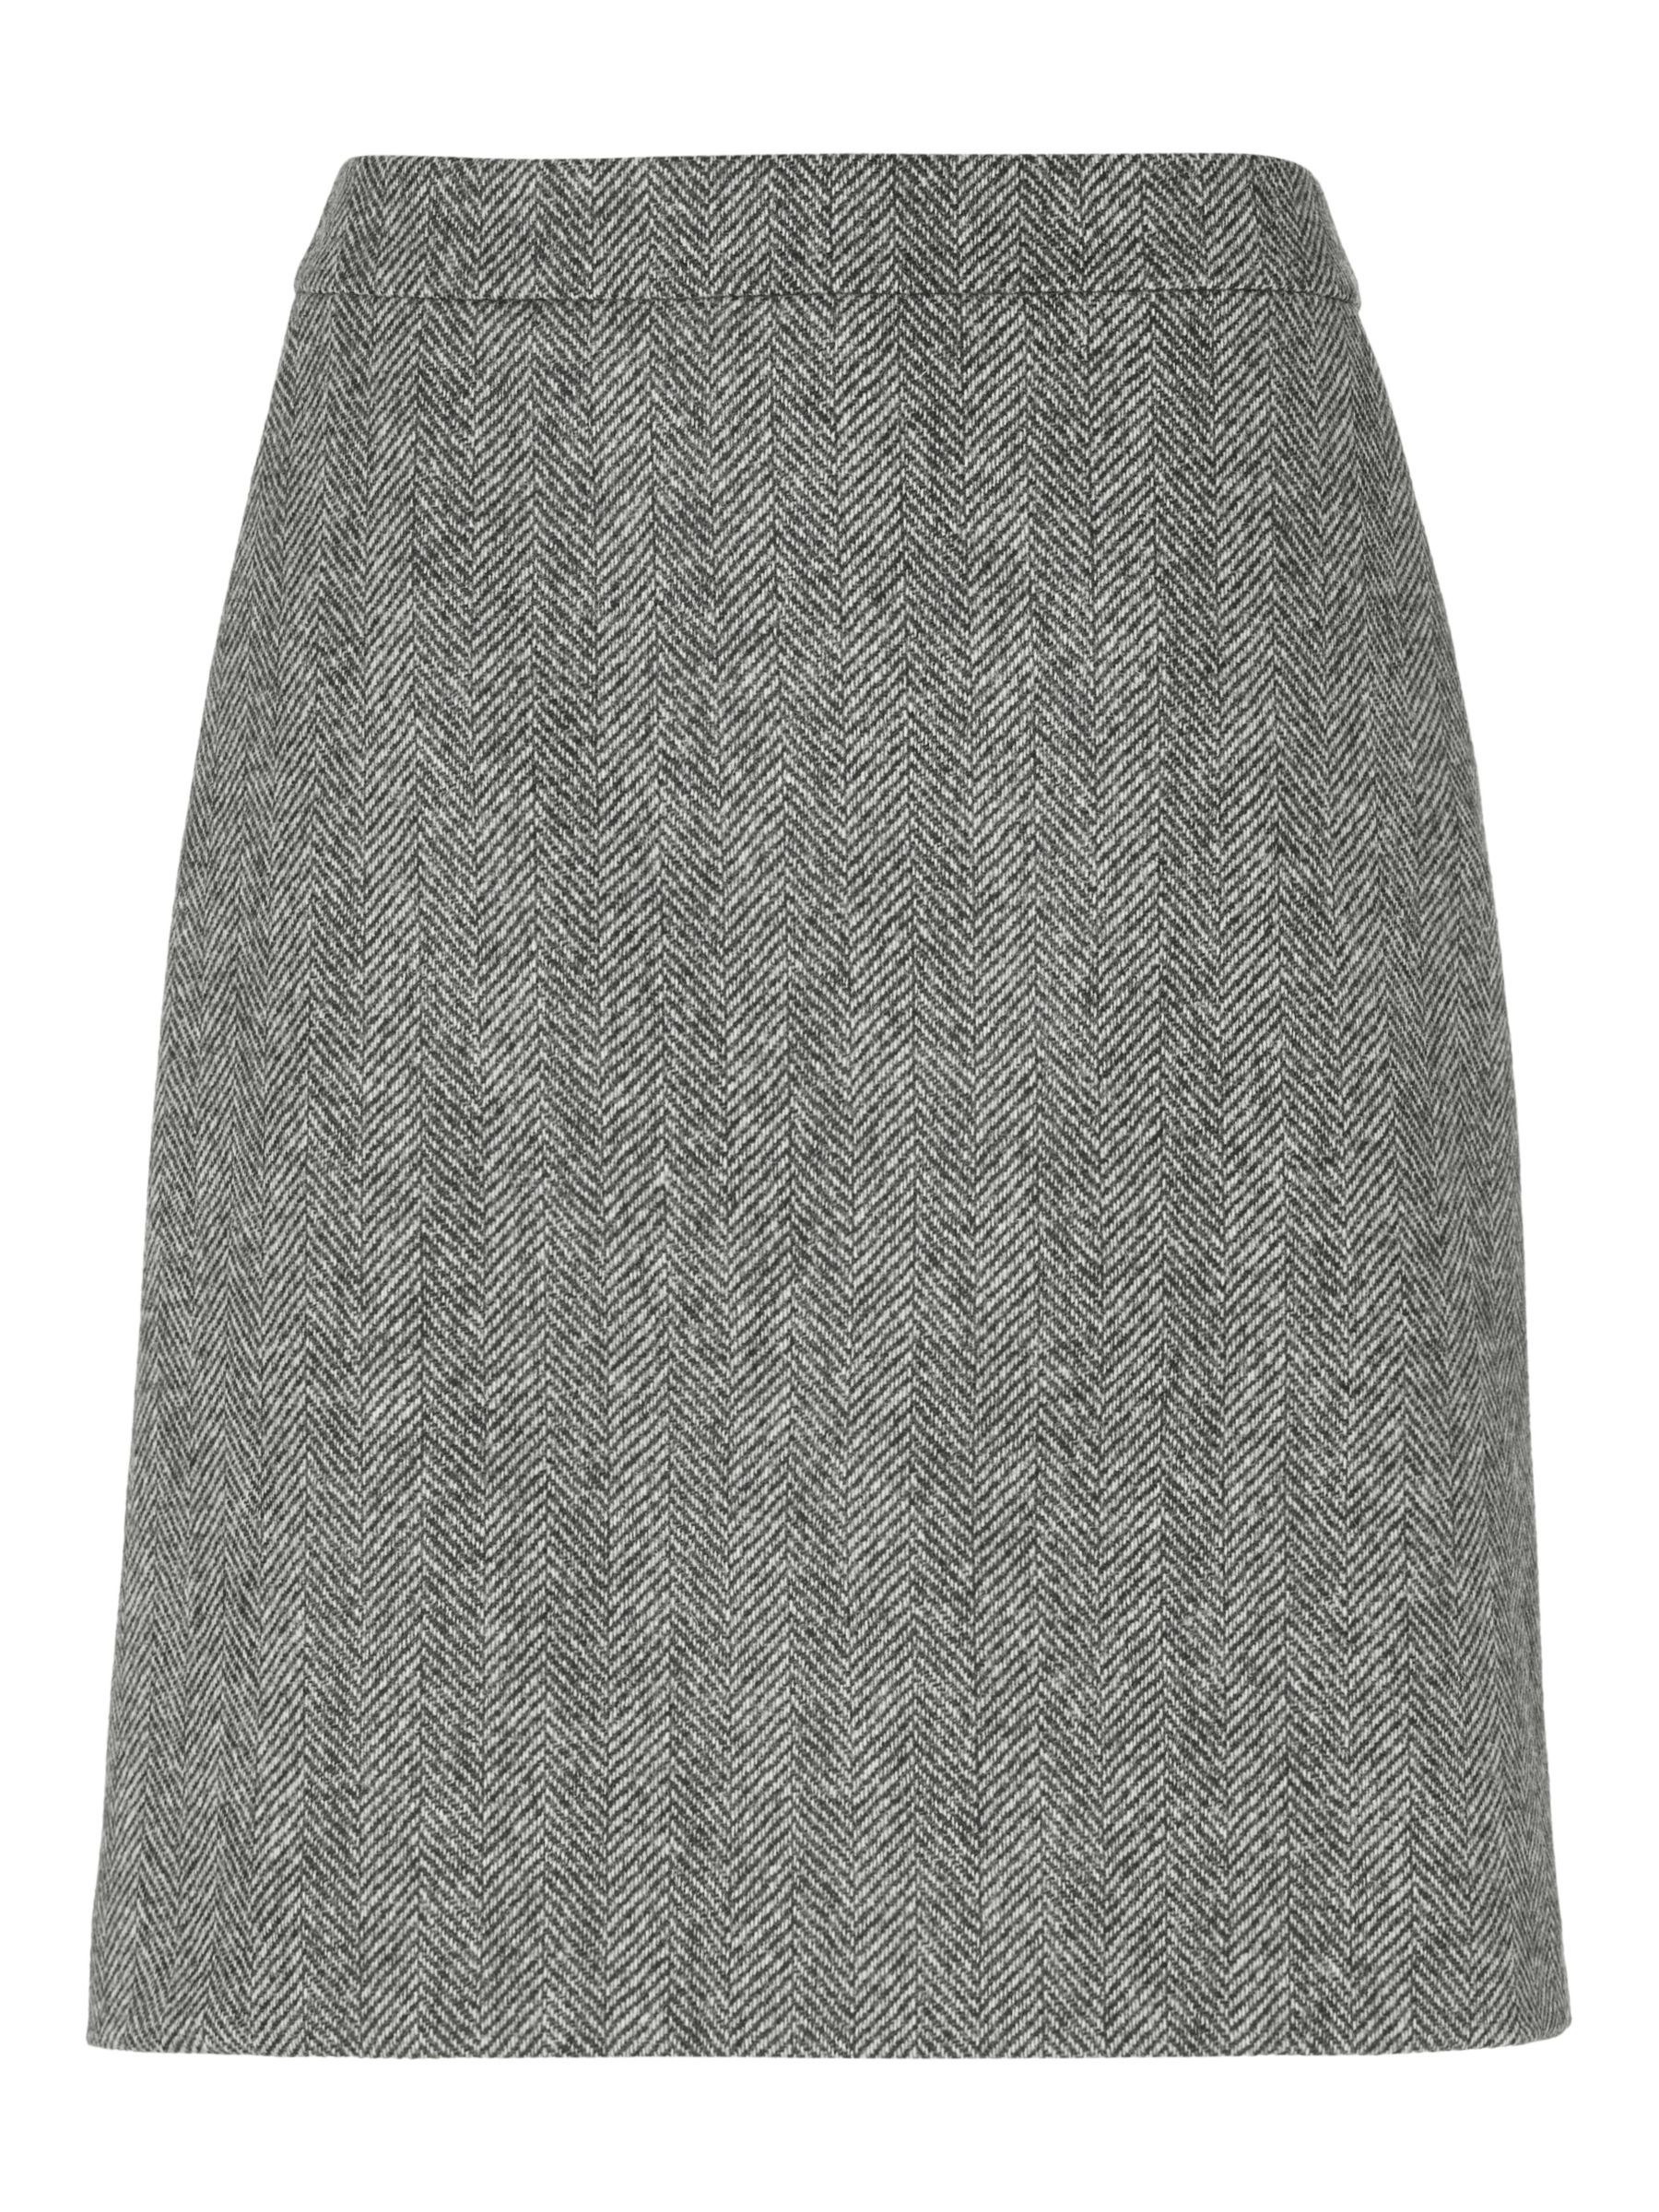 Boden British Tweed Skirt, Grey Herringbone, 8R